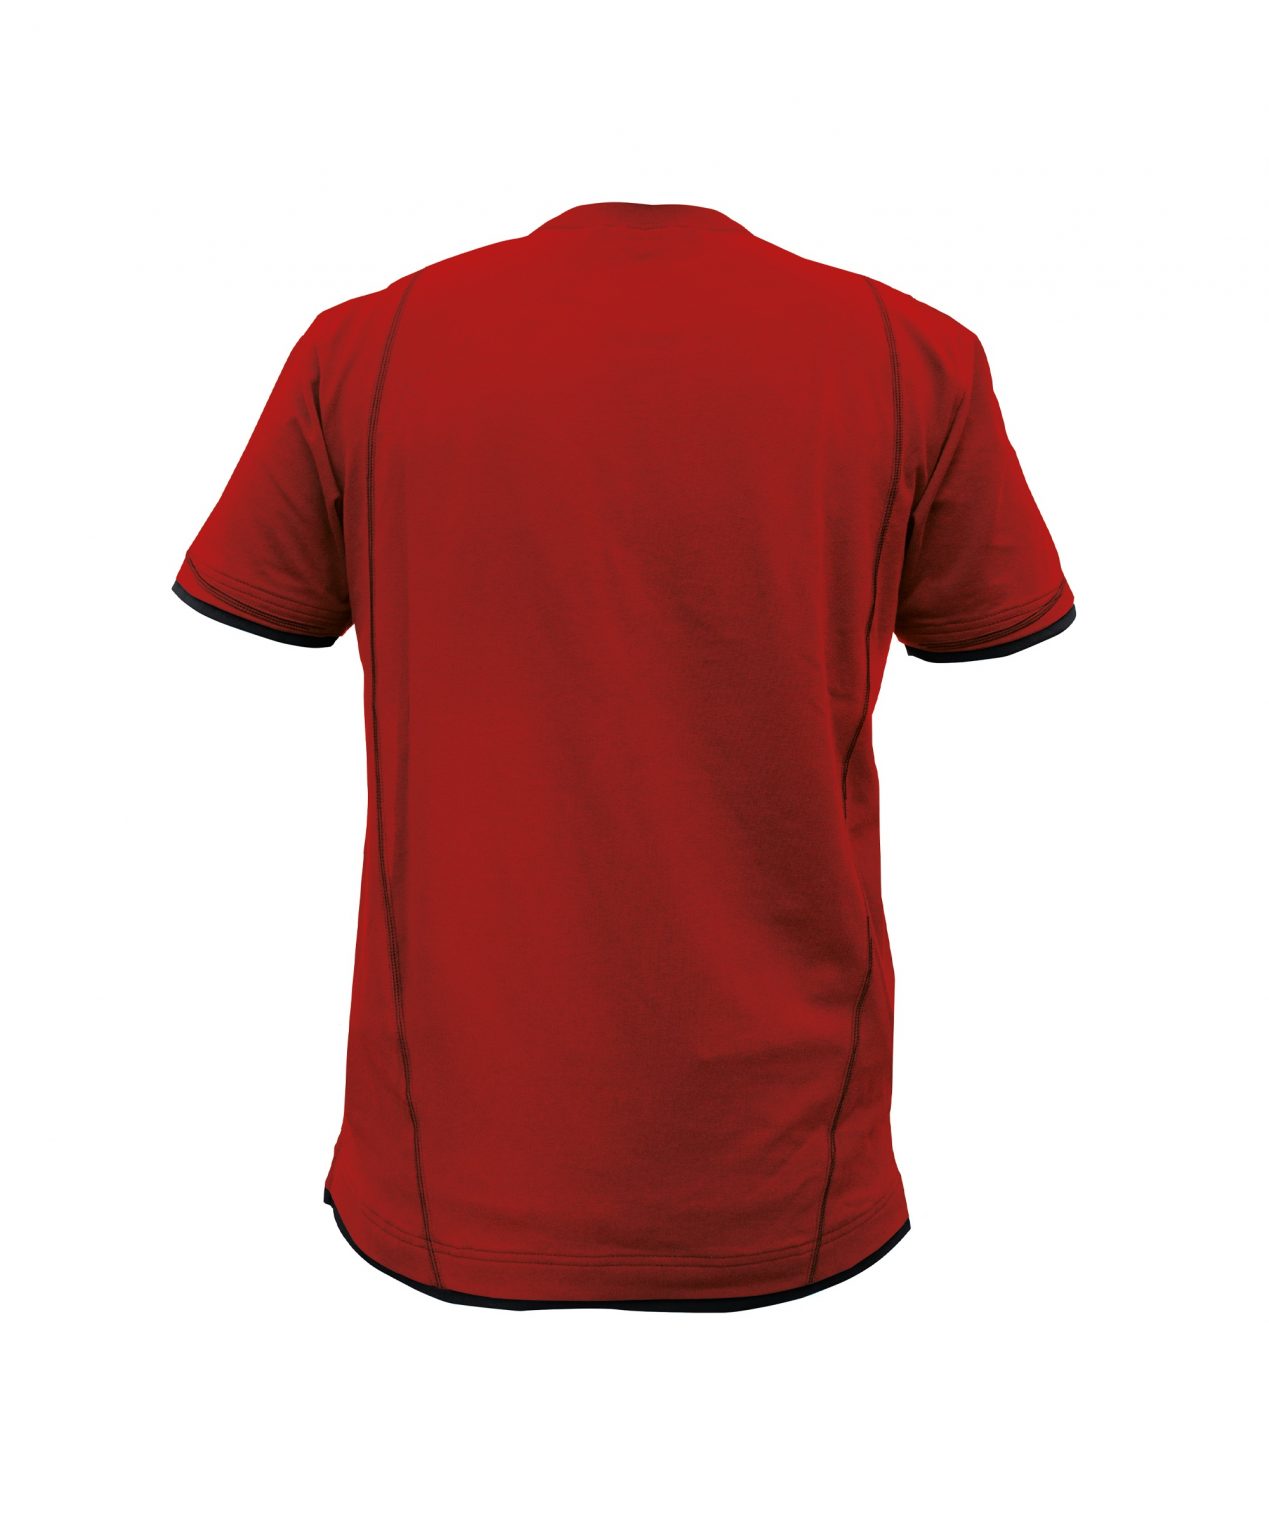 kinetic t shirt red black back